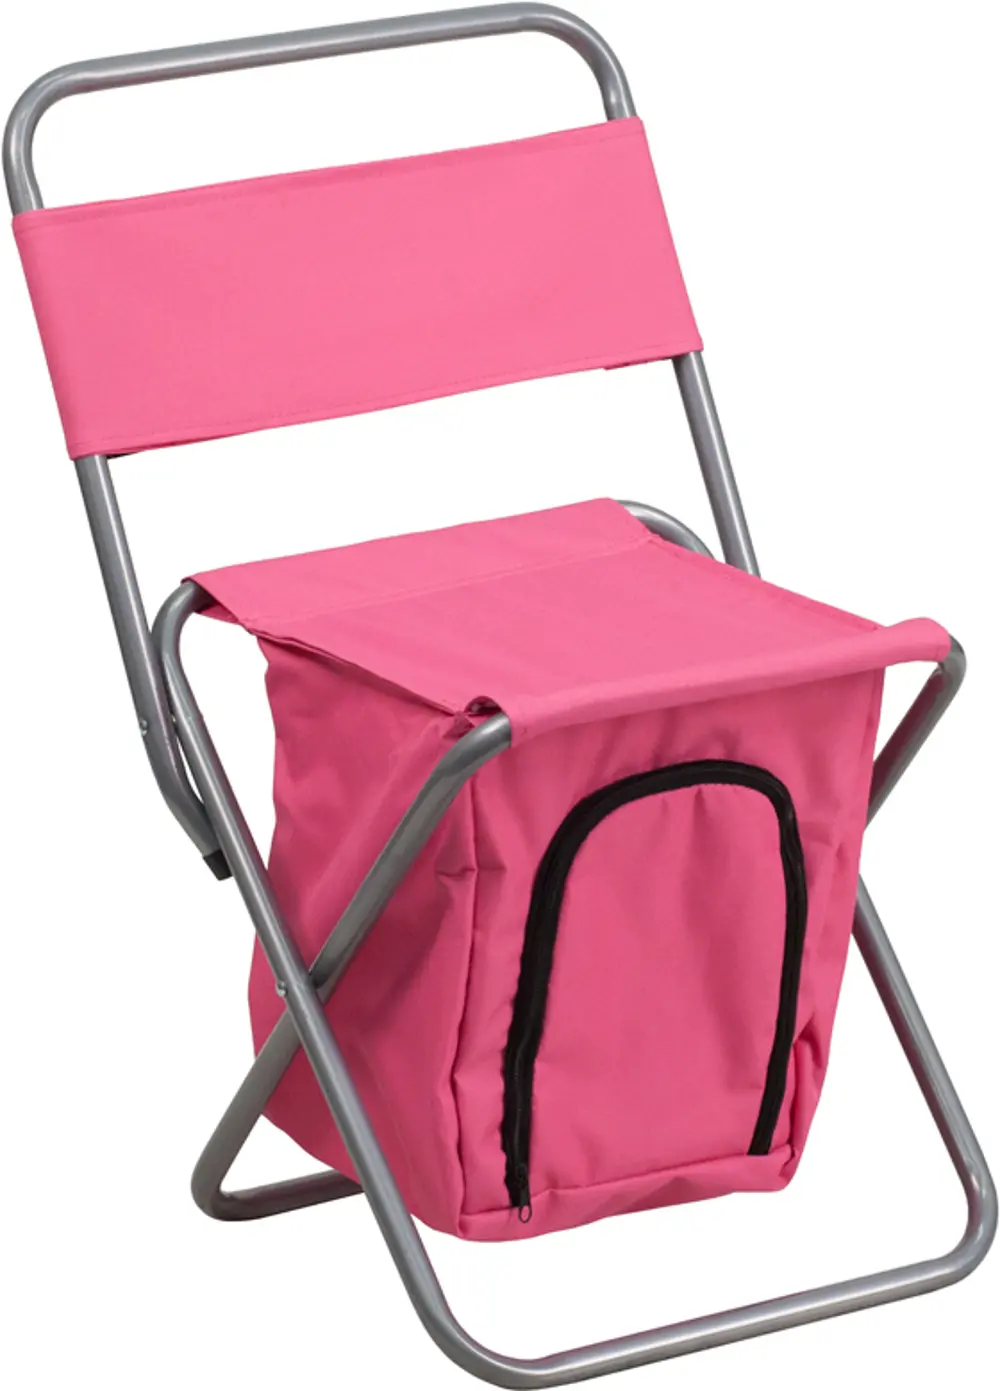 Kids Pink Folding Camping Chair-1